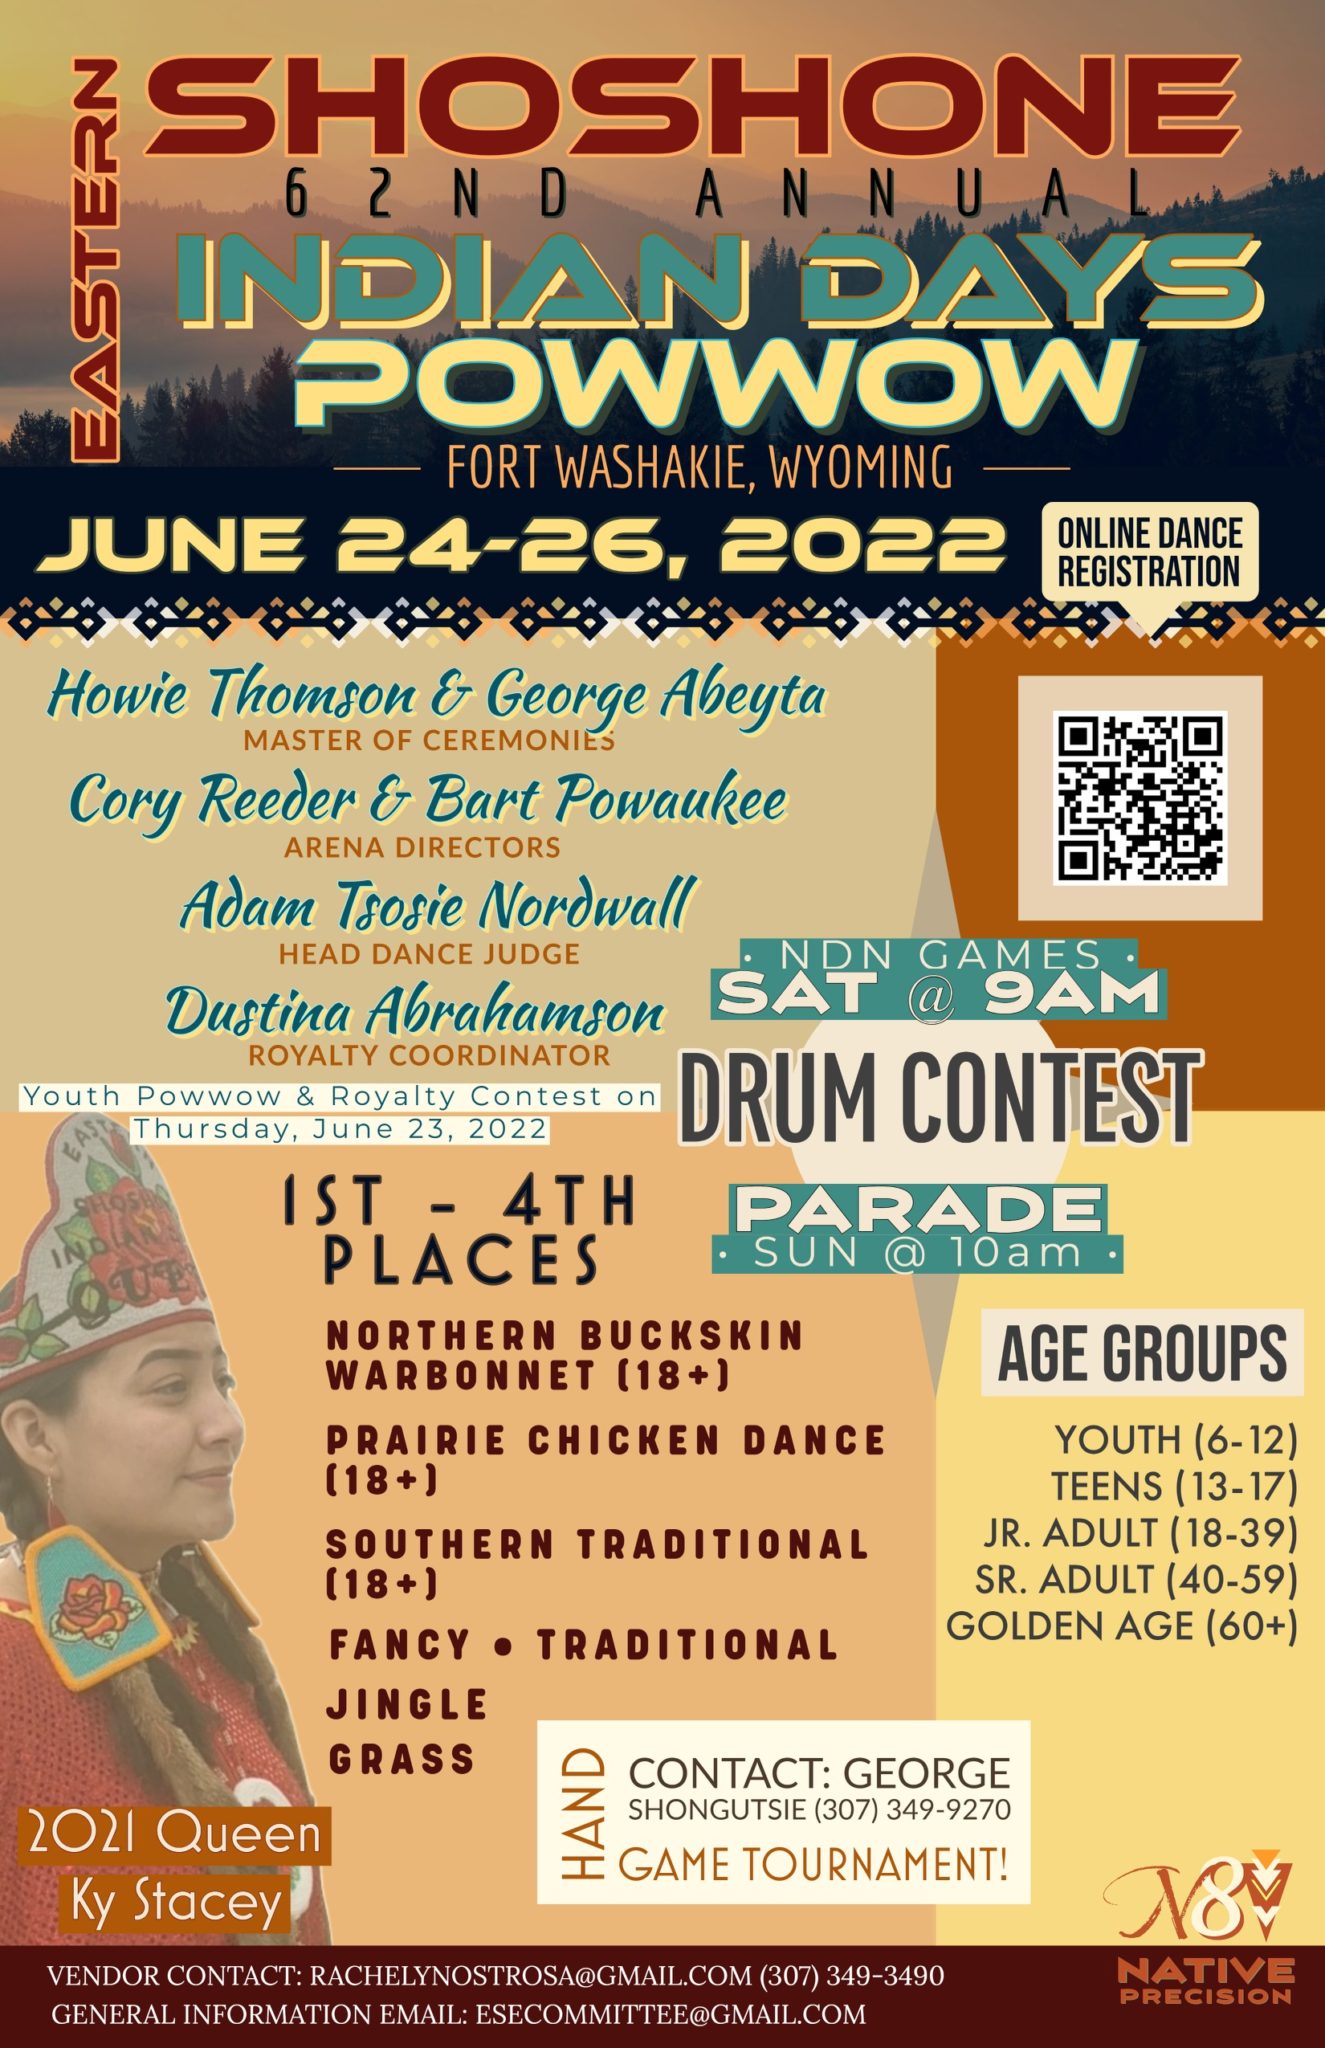 Eastern Shoshone Indian Days Powwow